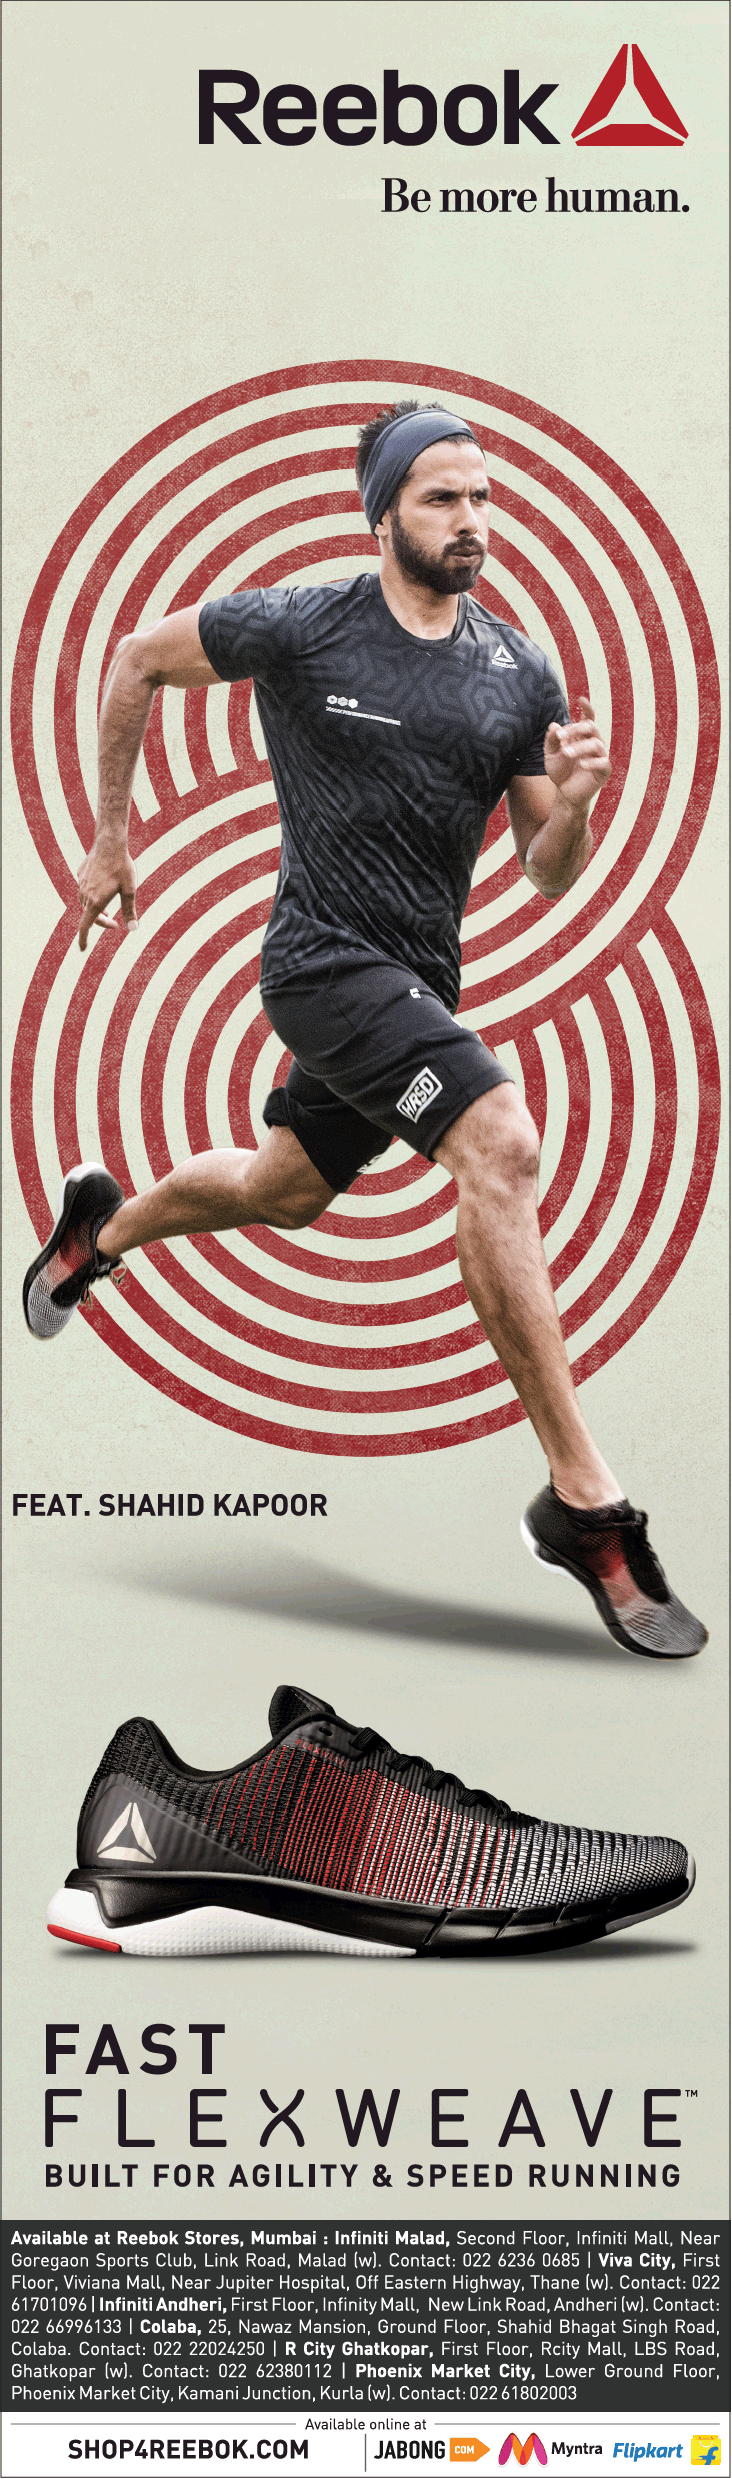 krybdyr Tåre Aktiver Reebok Be More Human Fast Flexweave Shoes Shahid Kapoor Ad - Advert Gallery